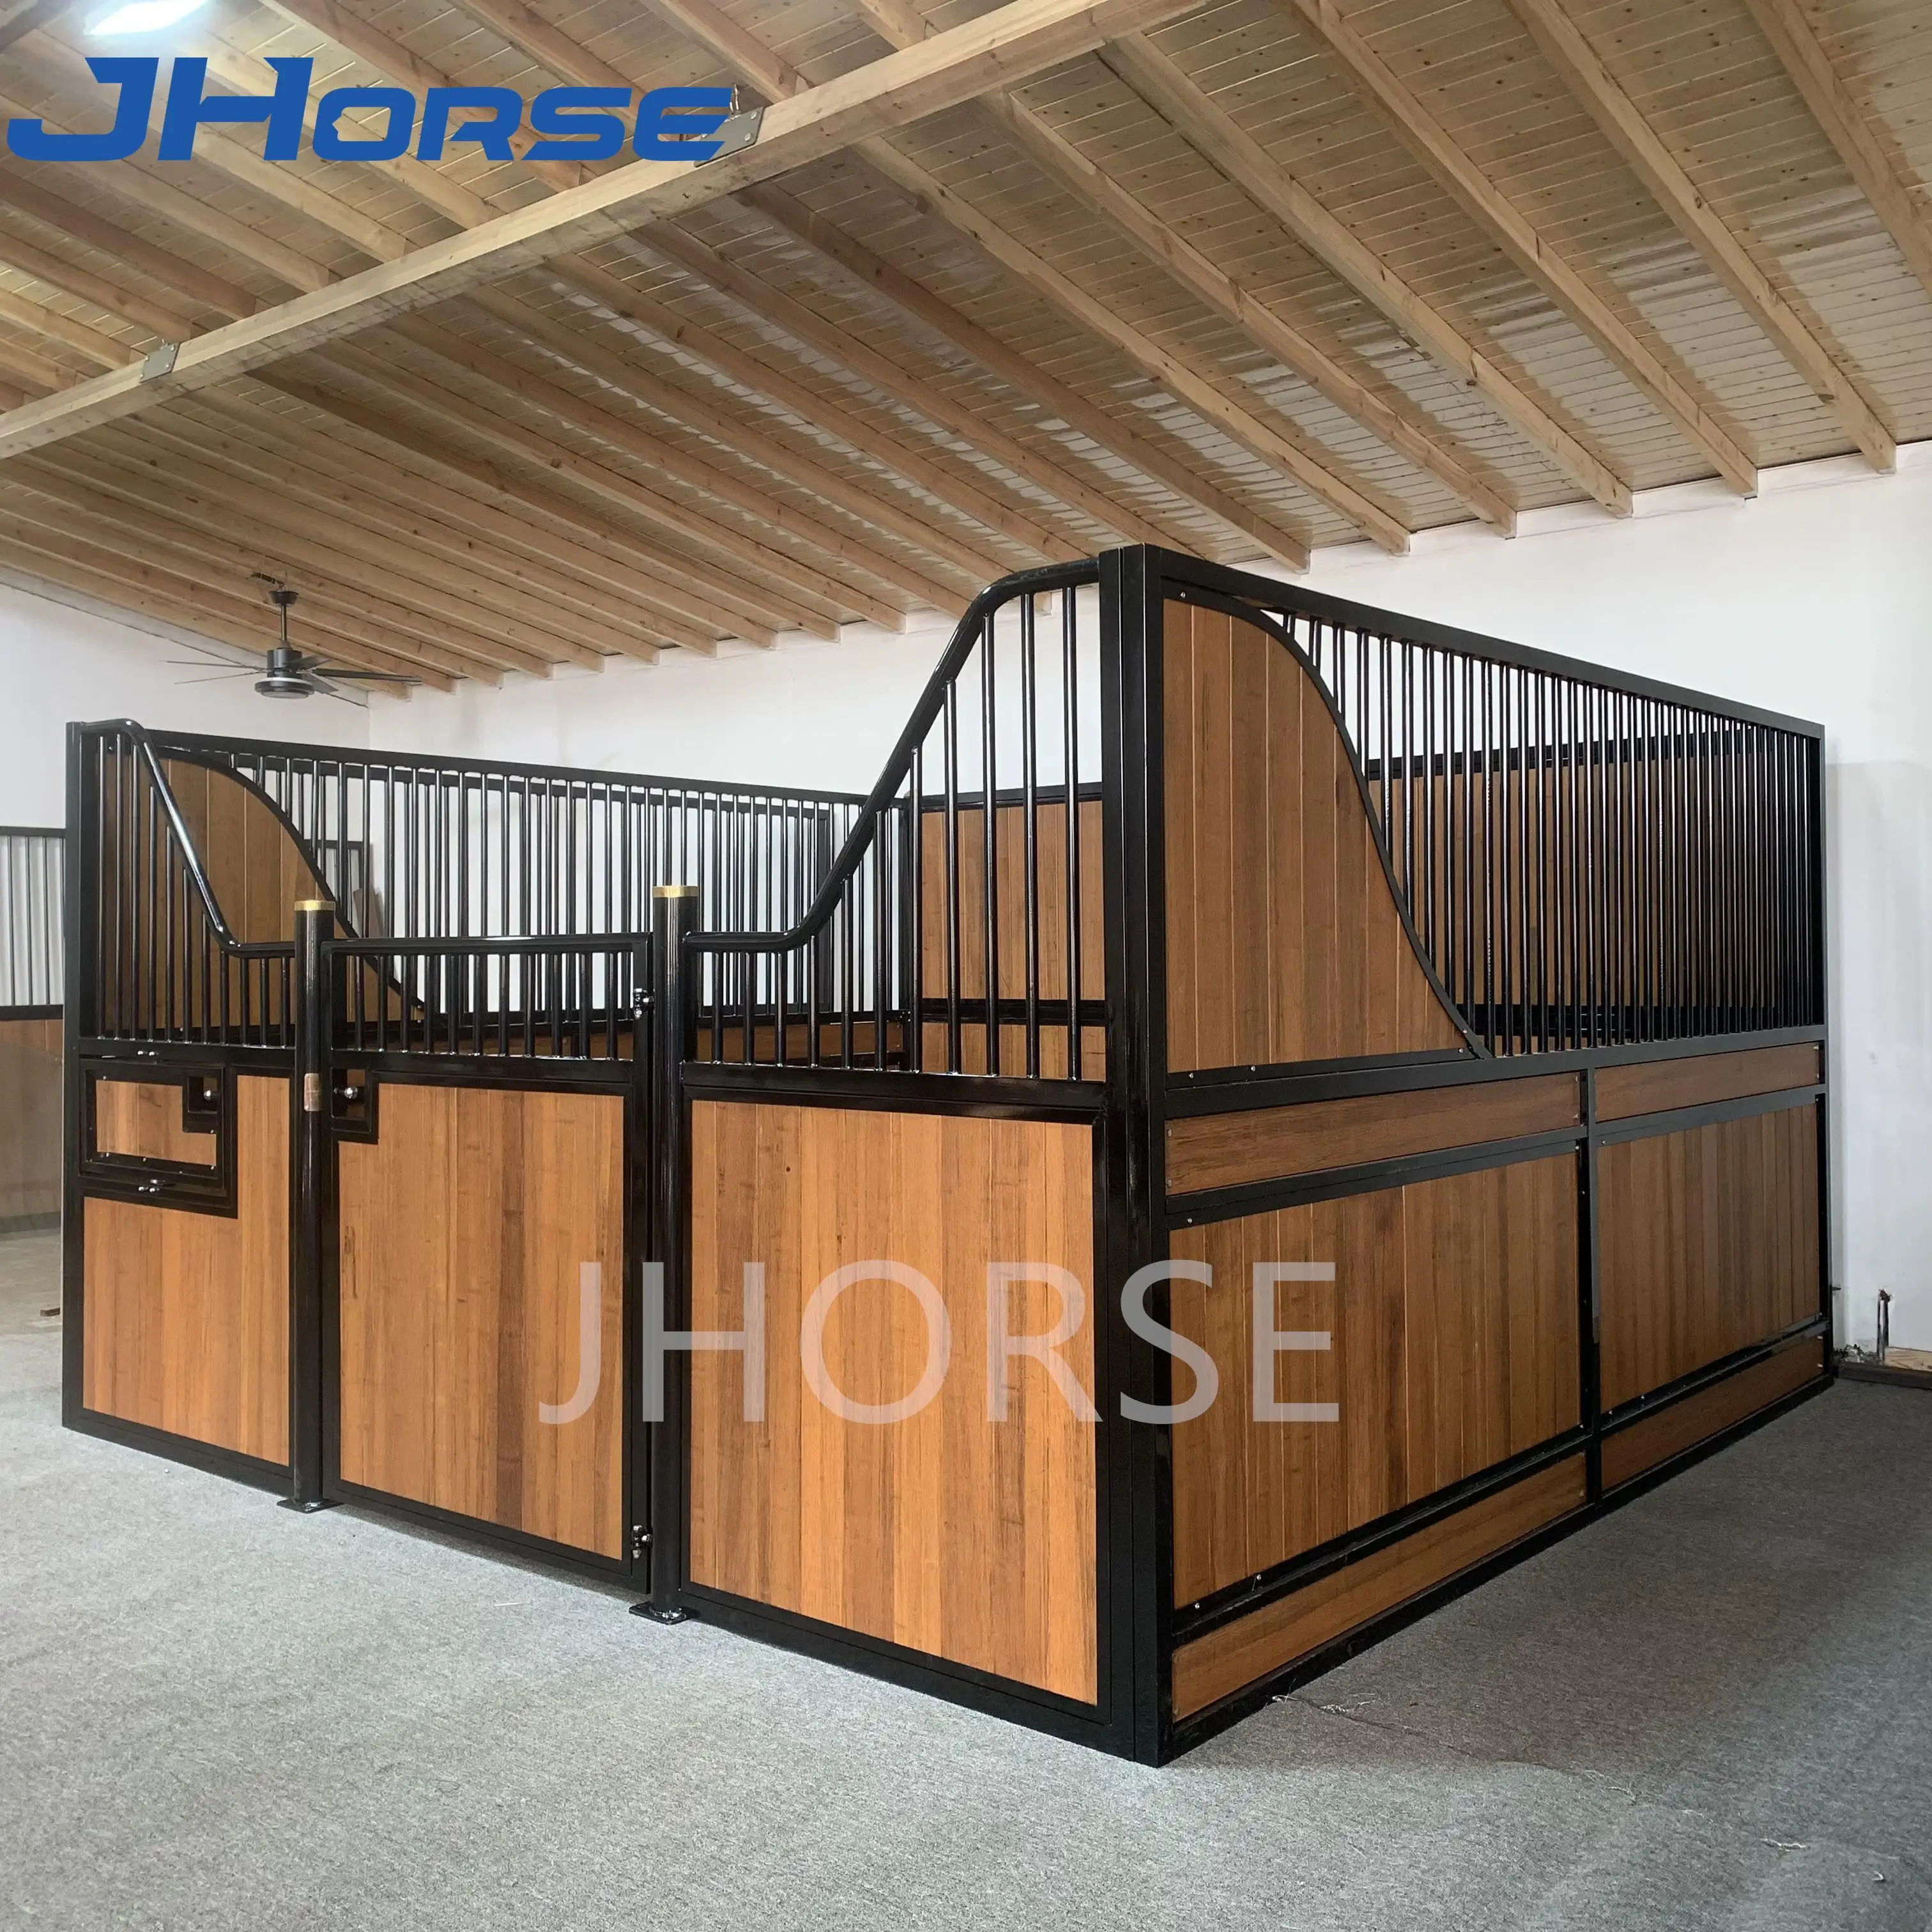 Forniture Equine divisori stabili per cavalli usati in acciaio zincato interno